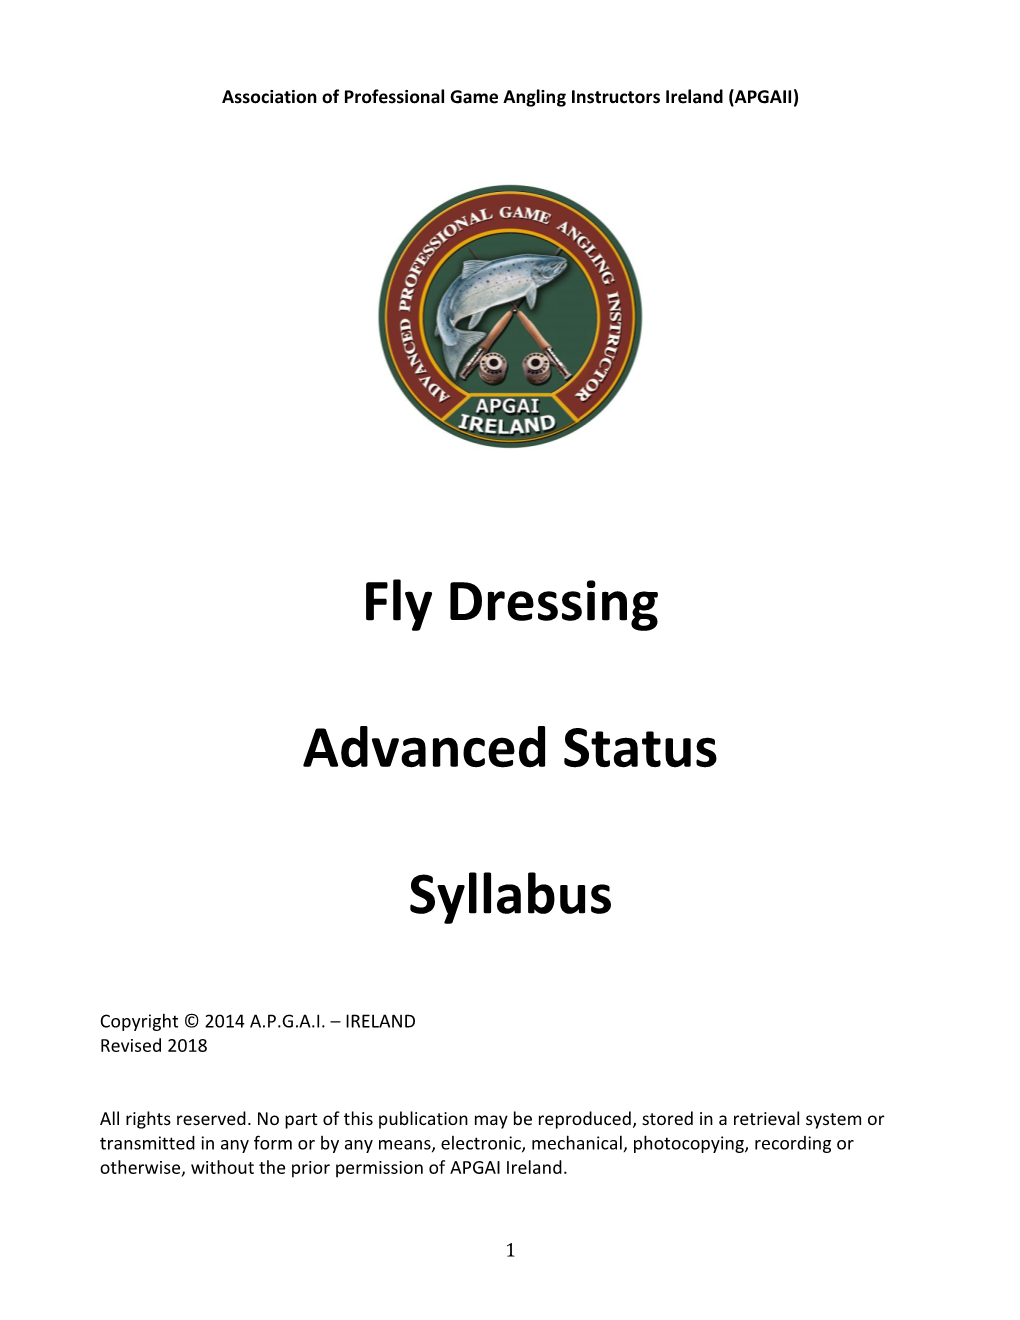 Fly Dressing Advanced Status Syllabus